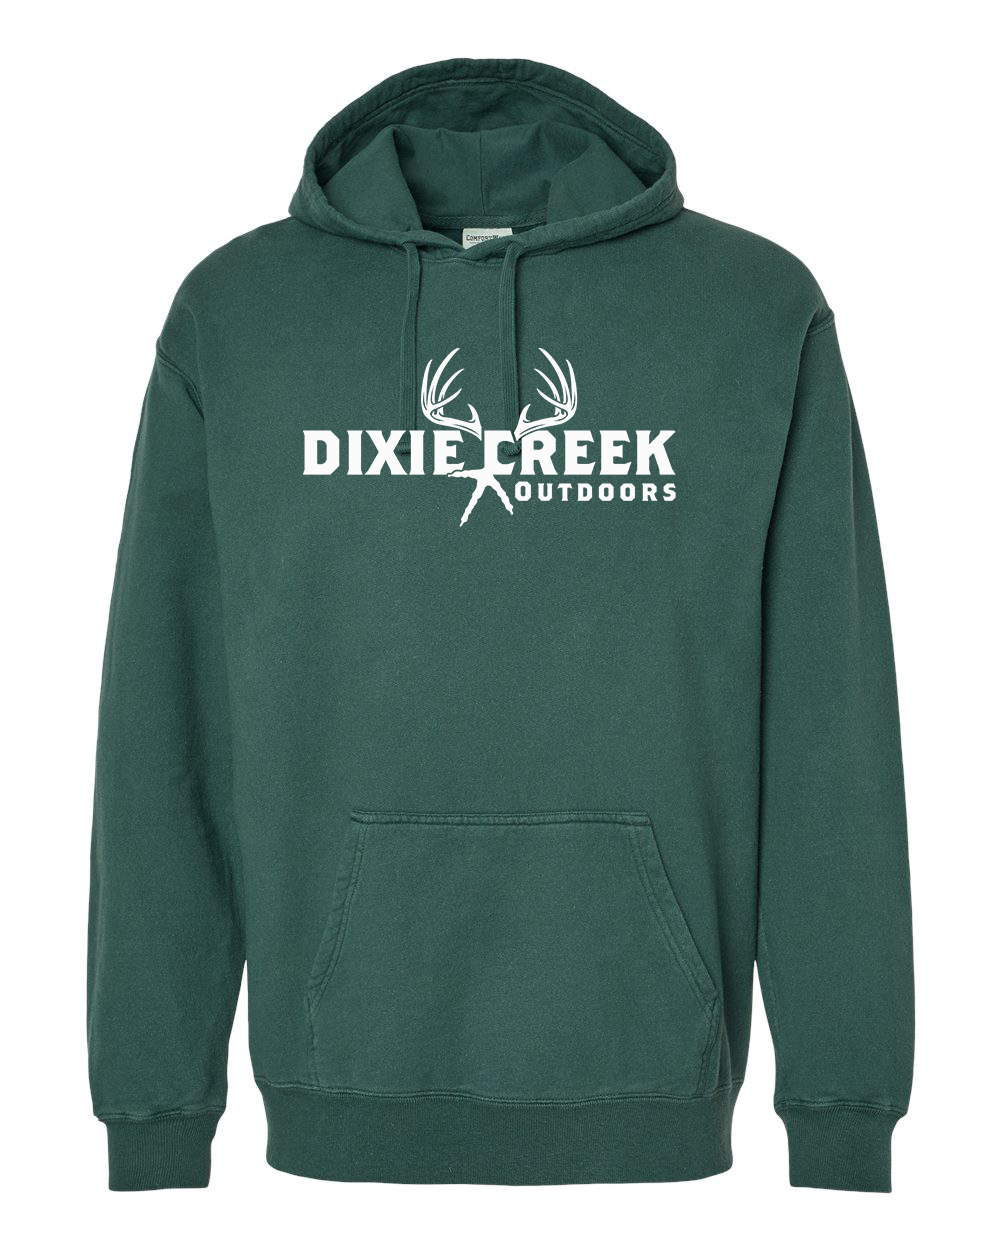 Dixie Creek Outdoors - Comfort Wash Hoodie